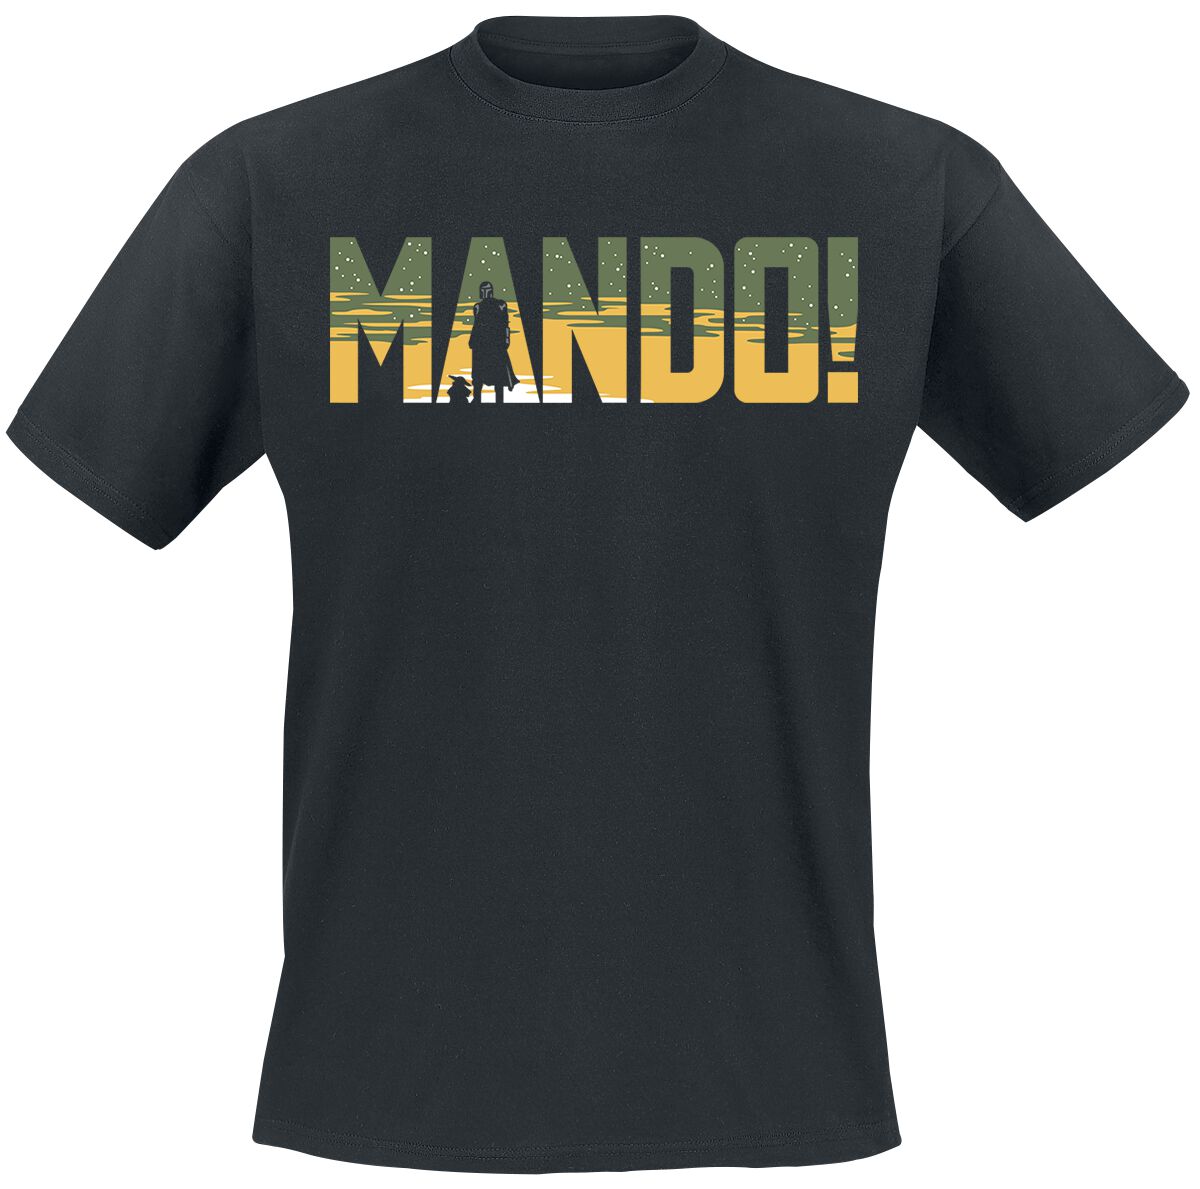 Star Wars The Mandalorian - Season 3 - Mando T-Shirt schwarz in XL